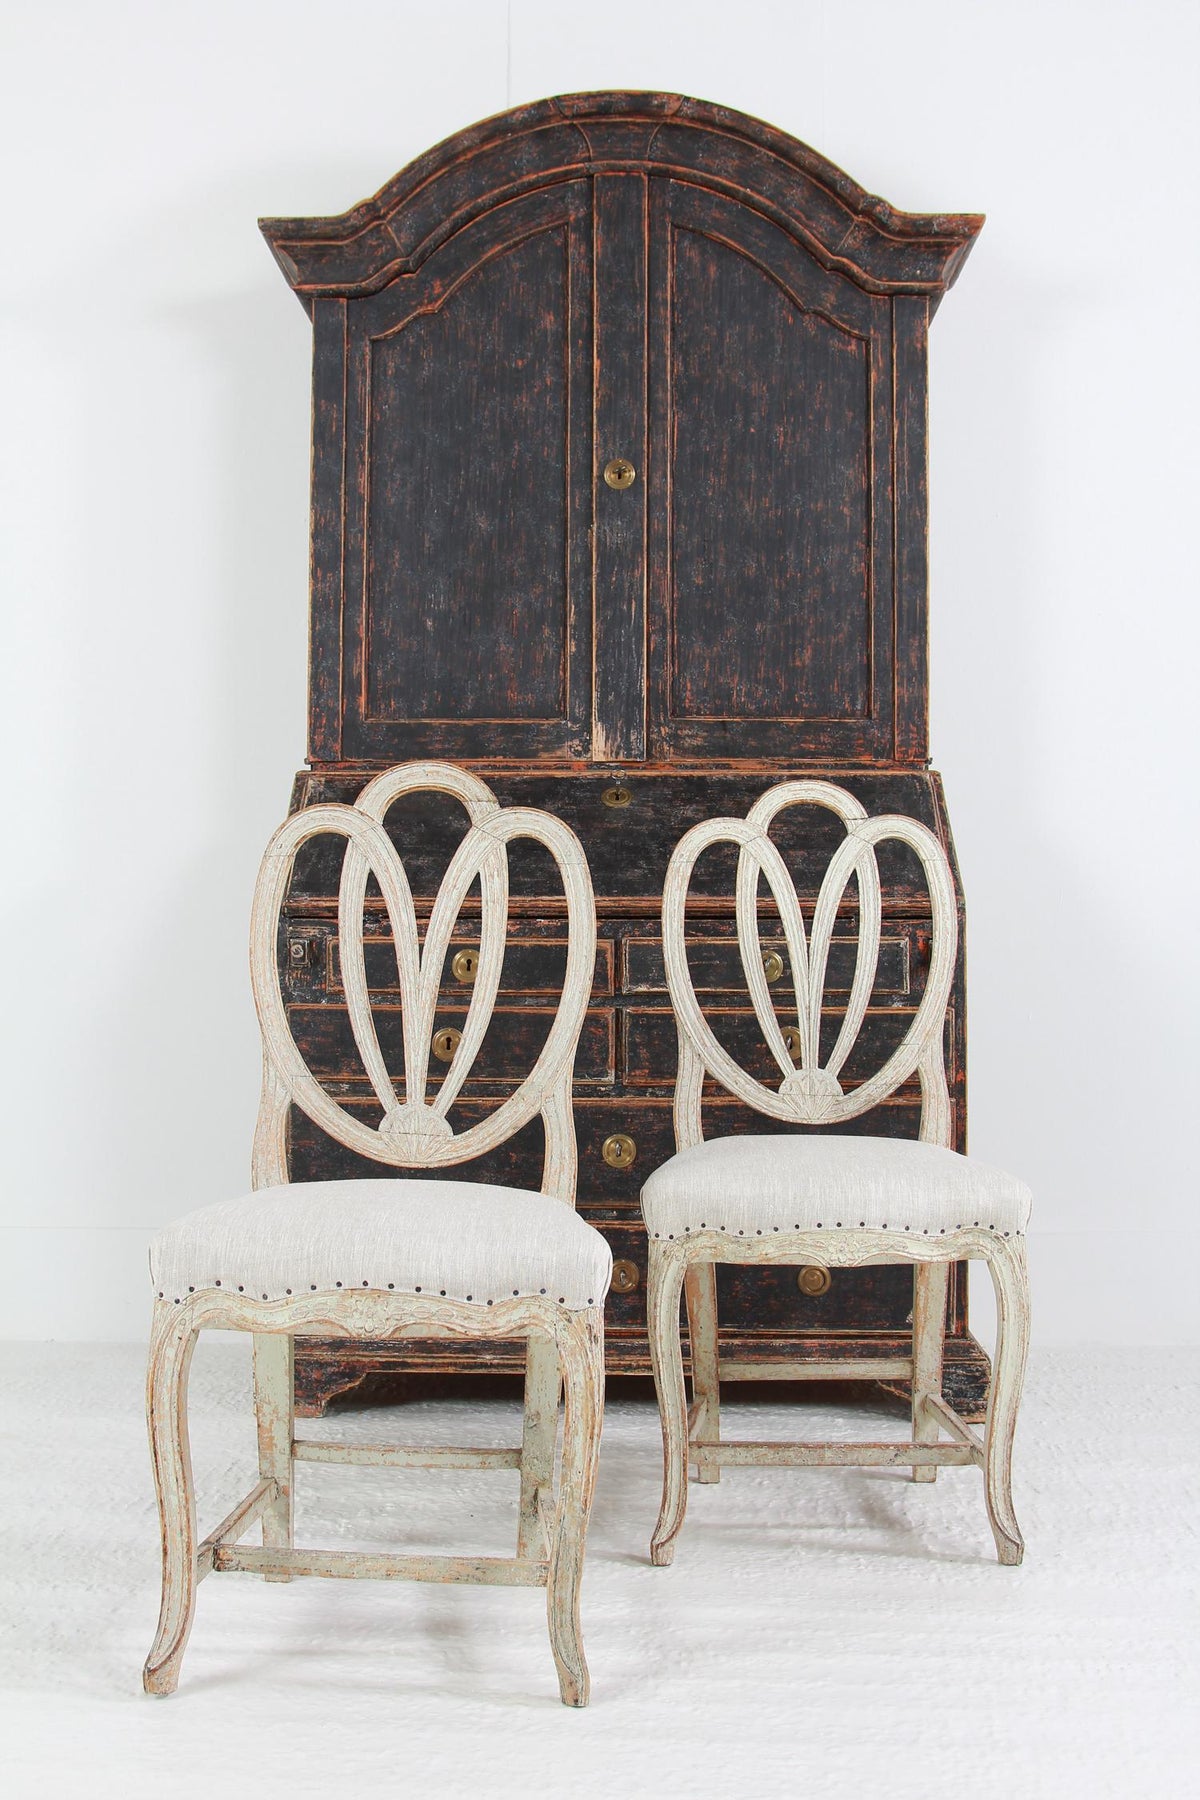 Beautiful Pair of Swedish Period Gustavian  18thC Lindome Chairs